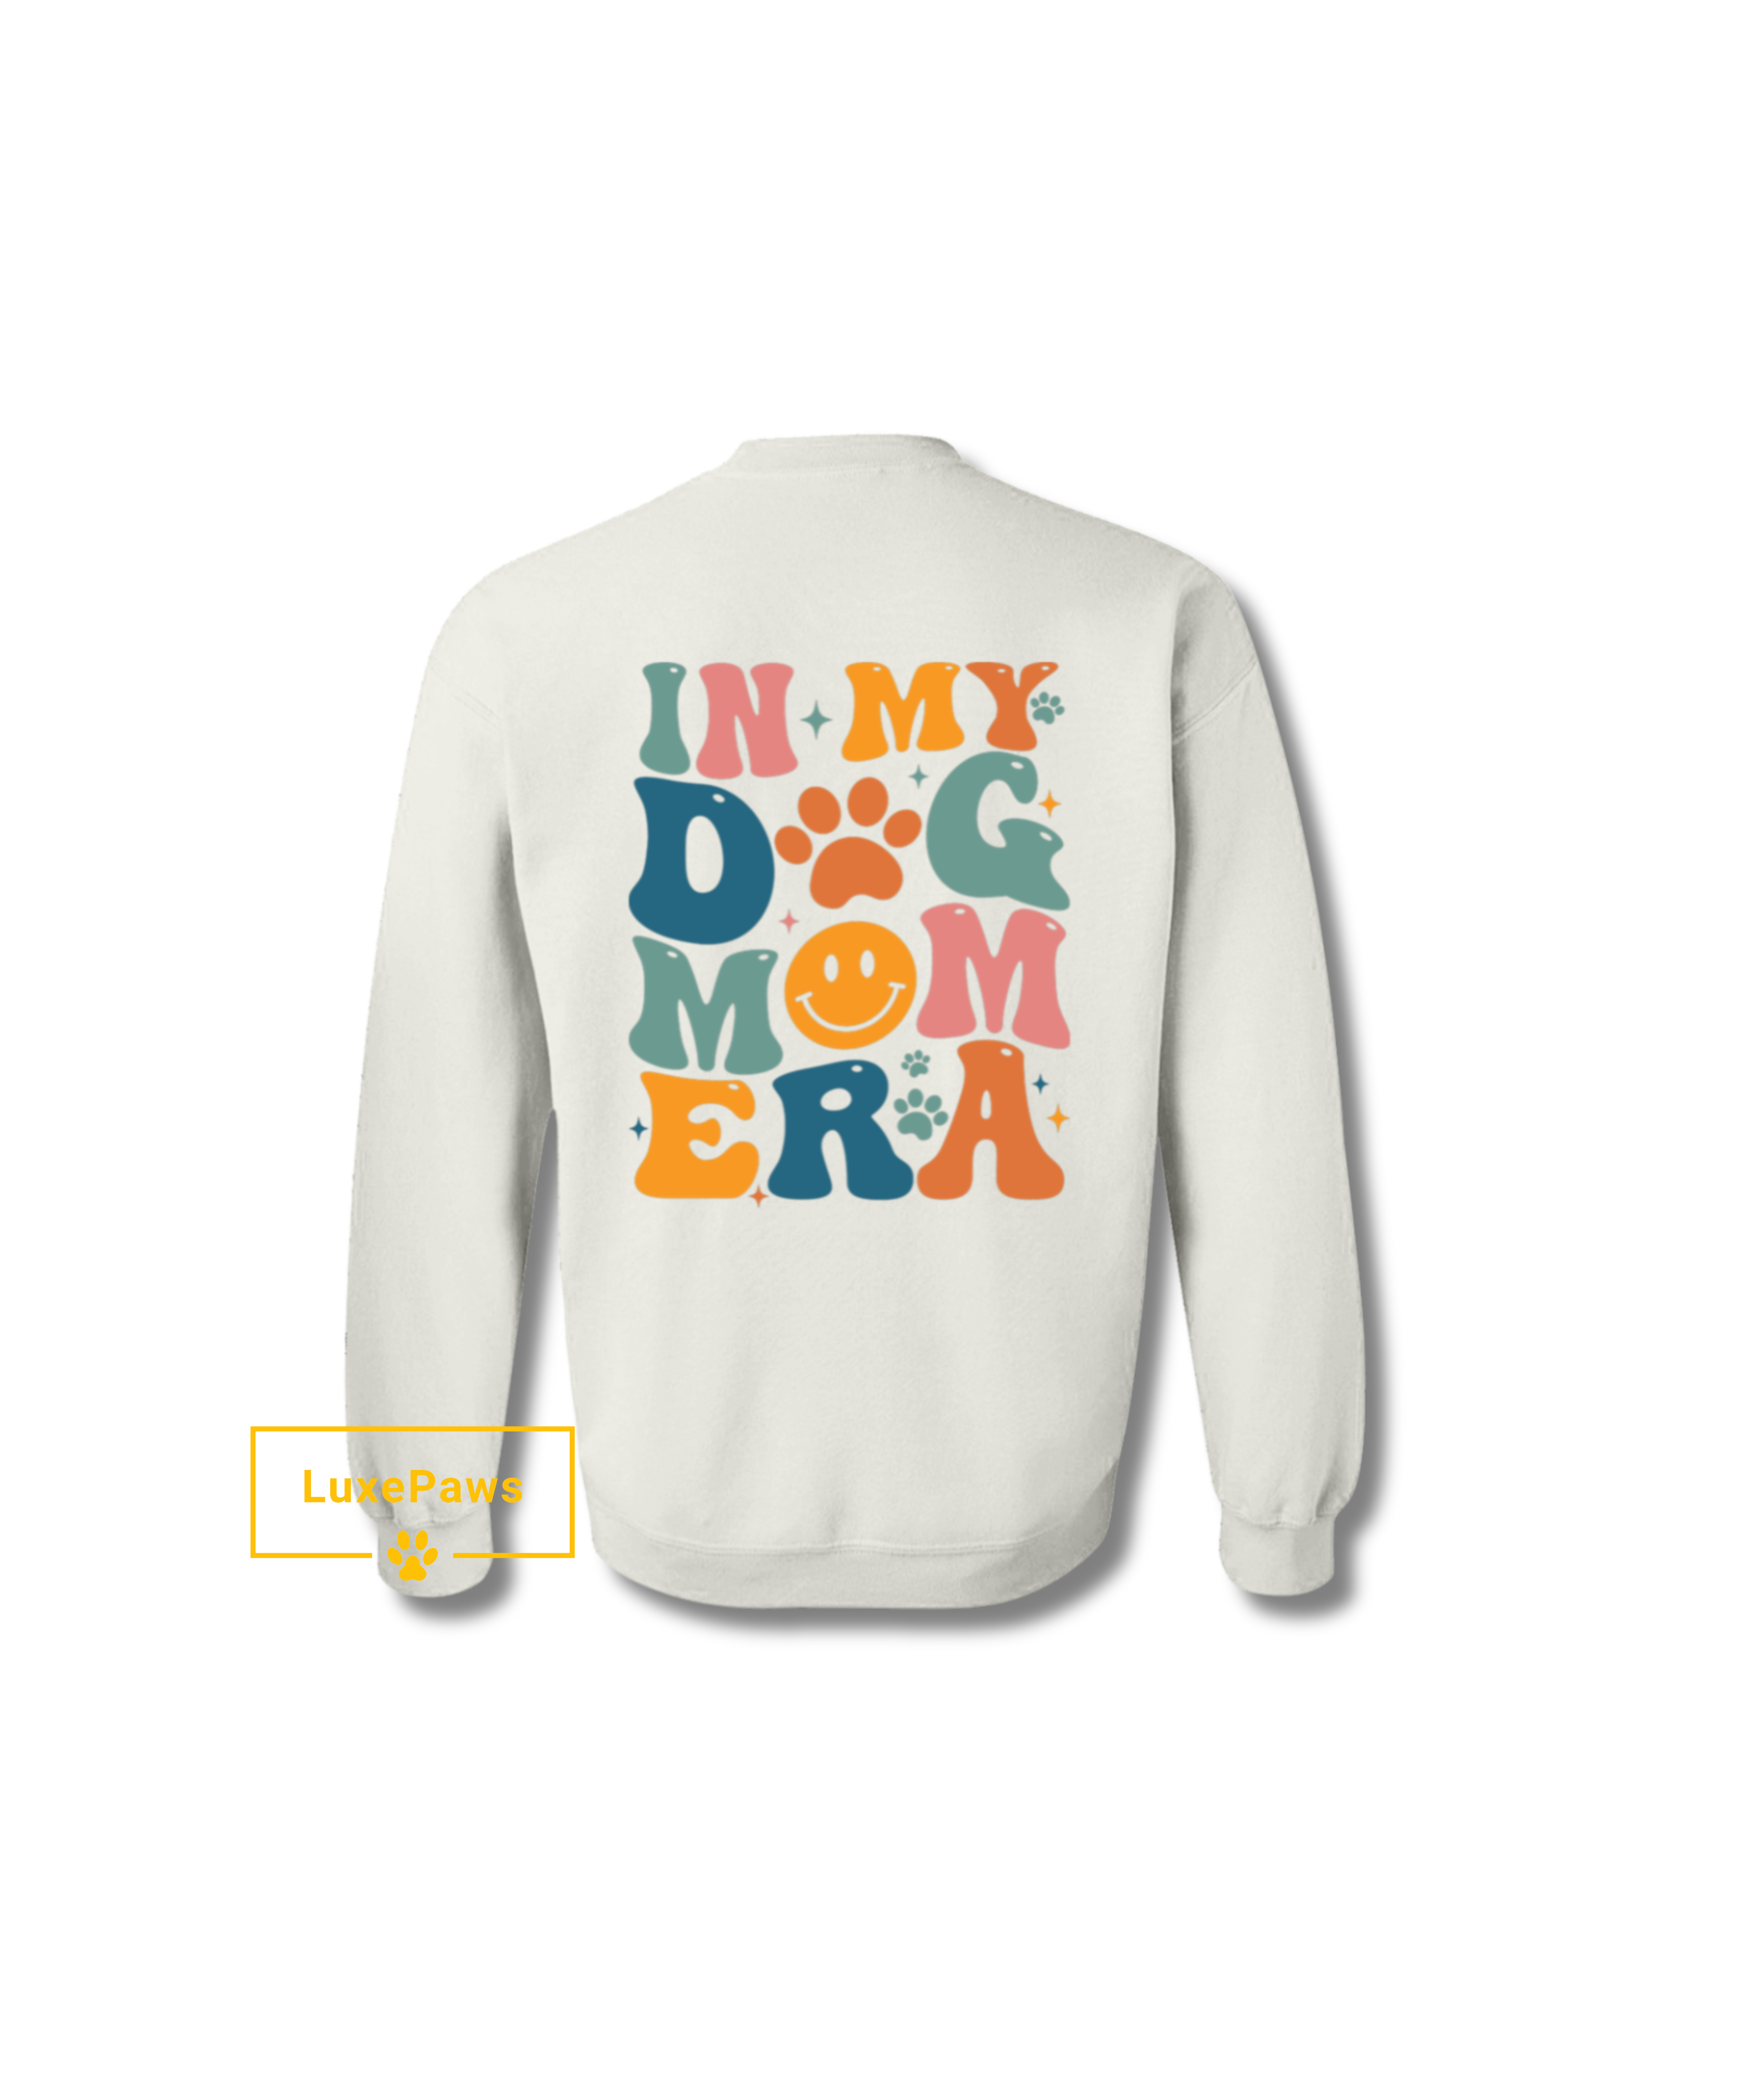 In My Dog Mom Era Sweatshirt | Pet Lovers